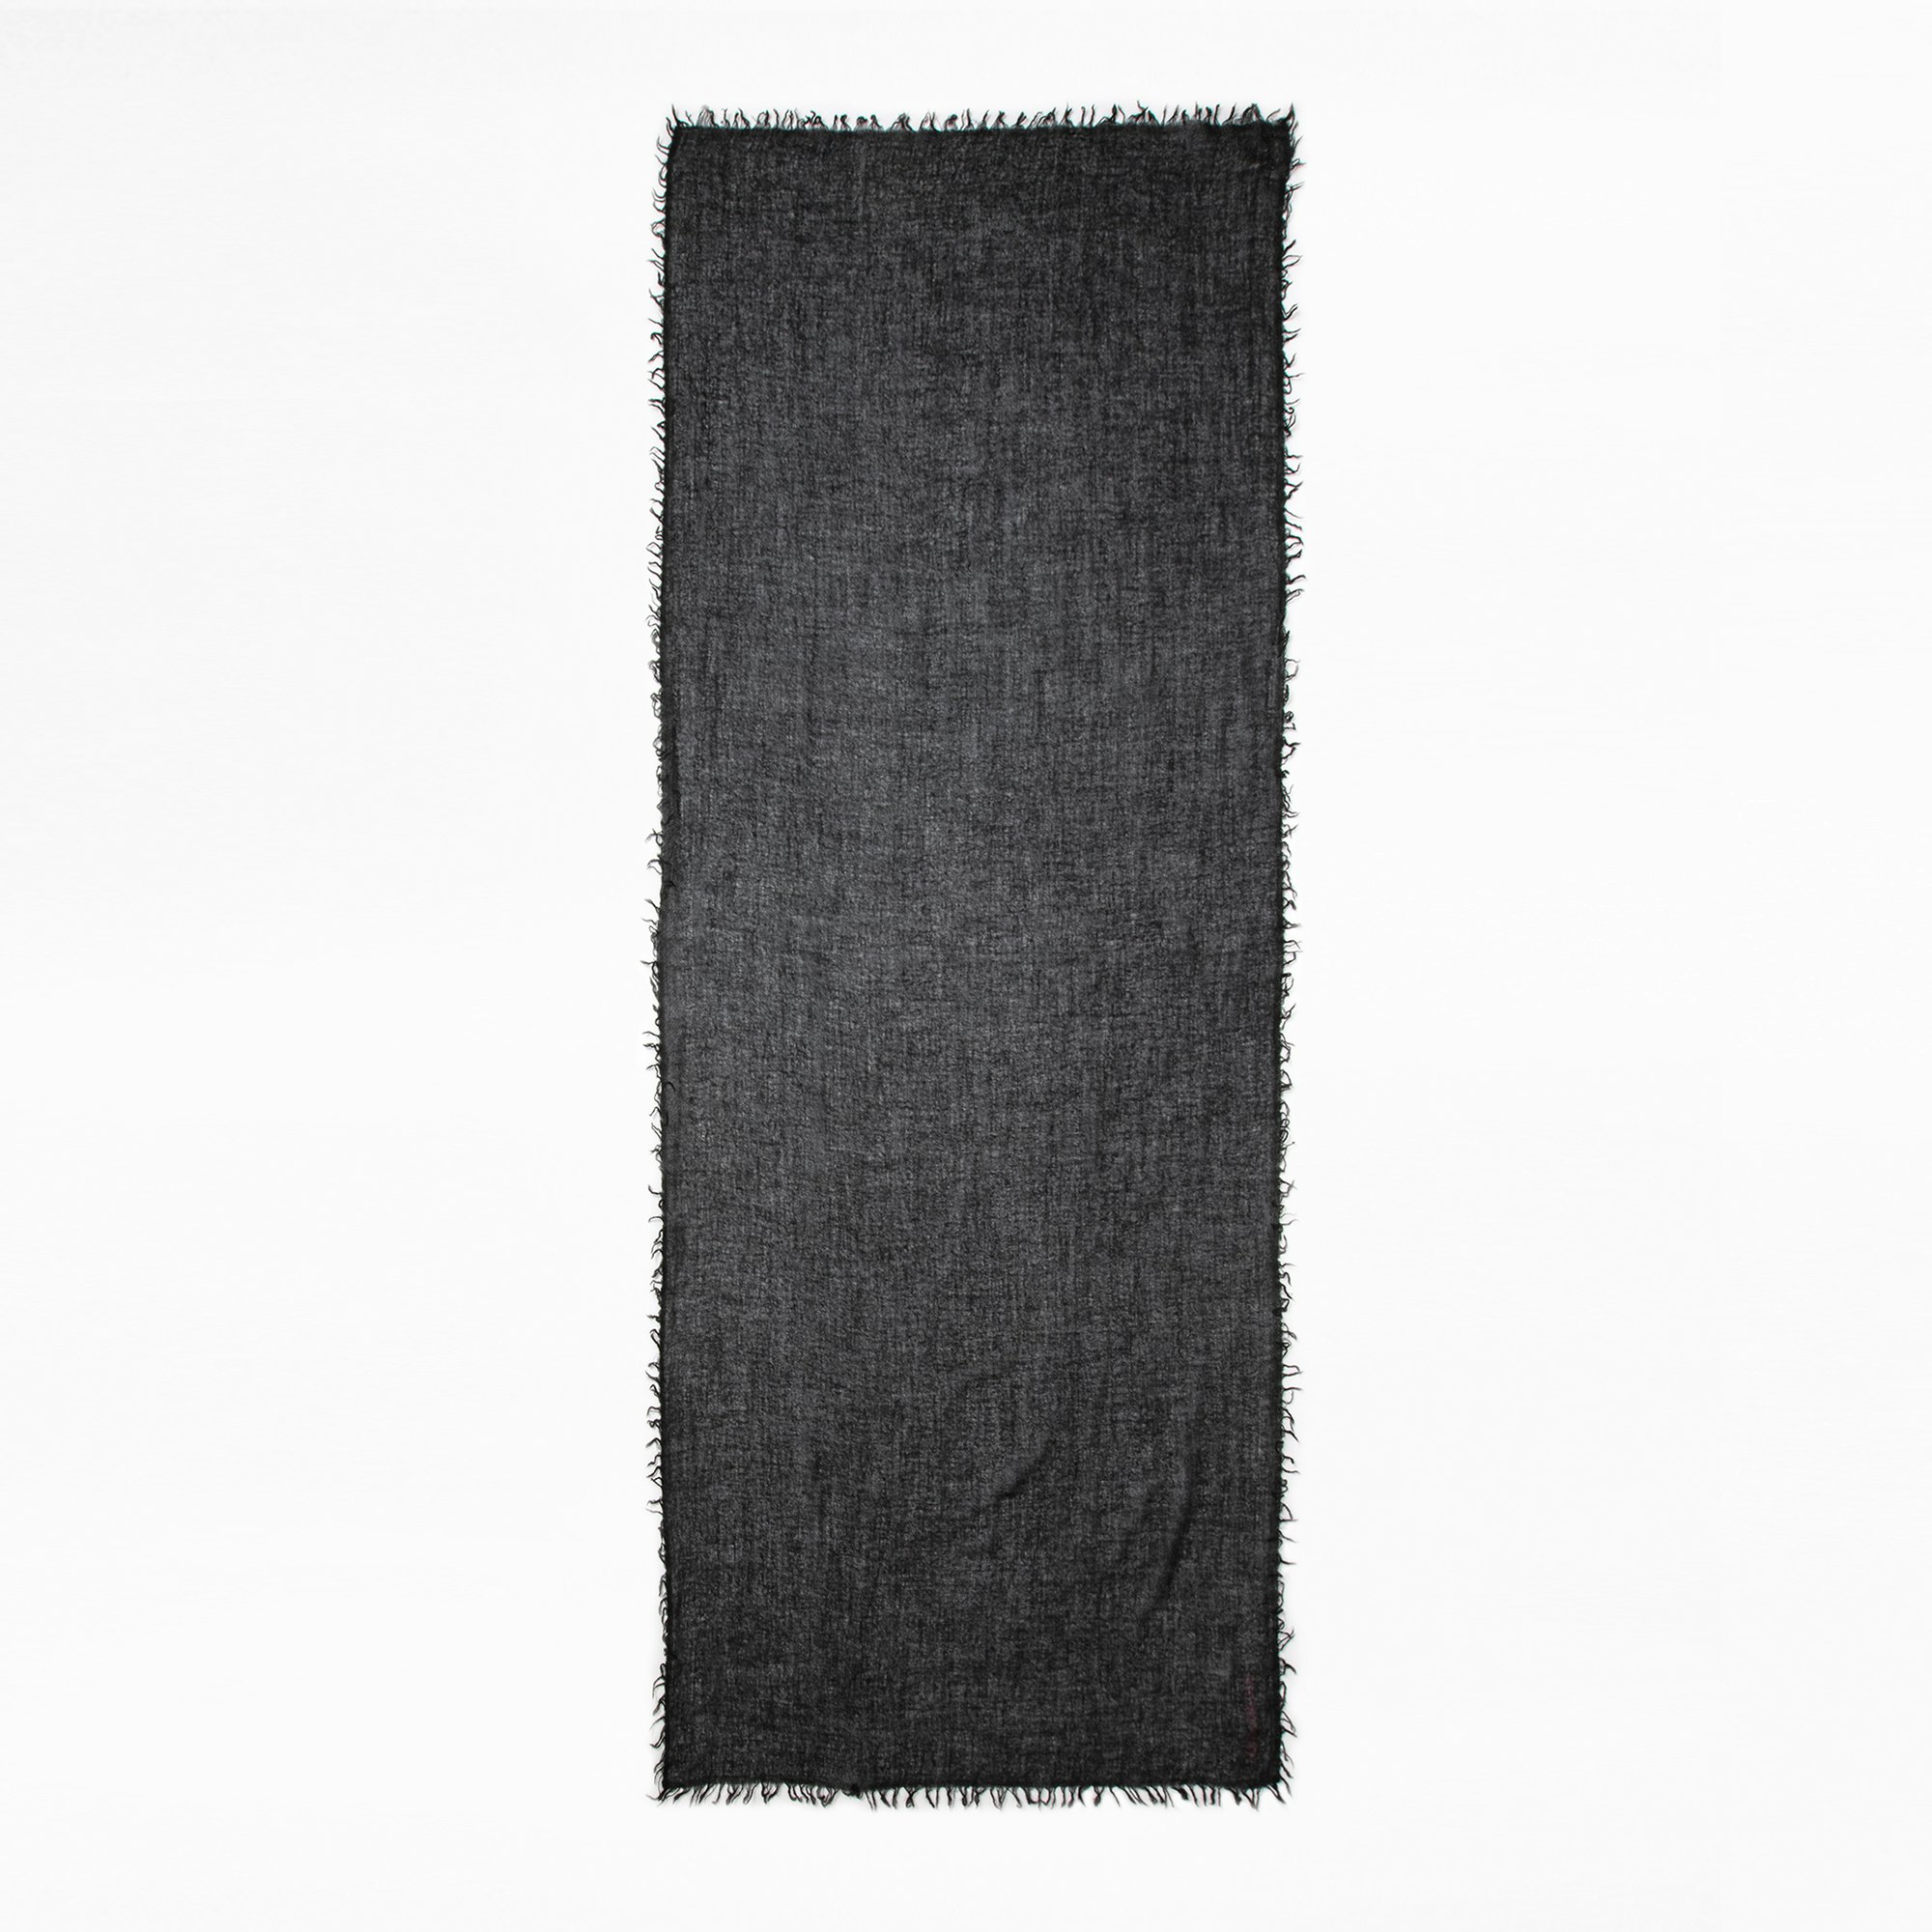 Nuage Scarf Women’s black cashmere scarf